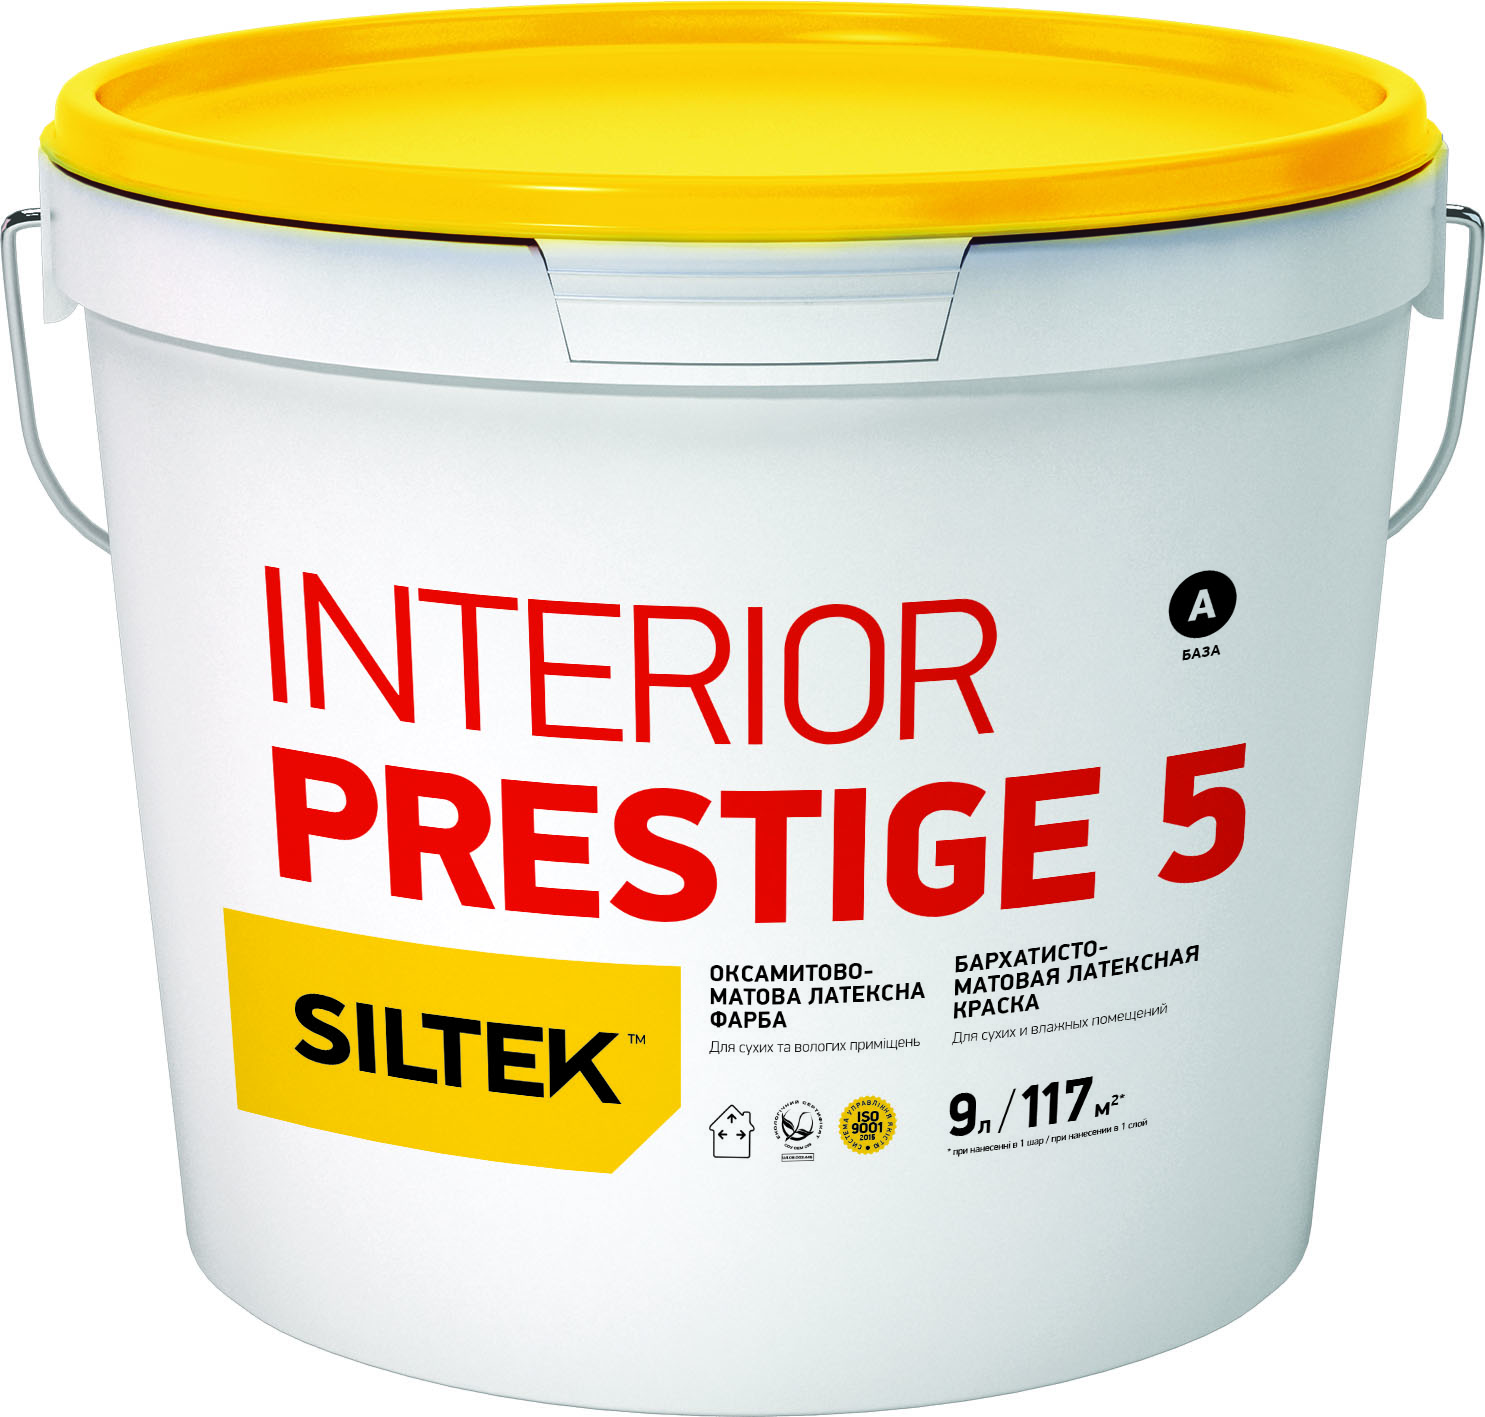 SILTEK Interior Prestige 5